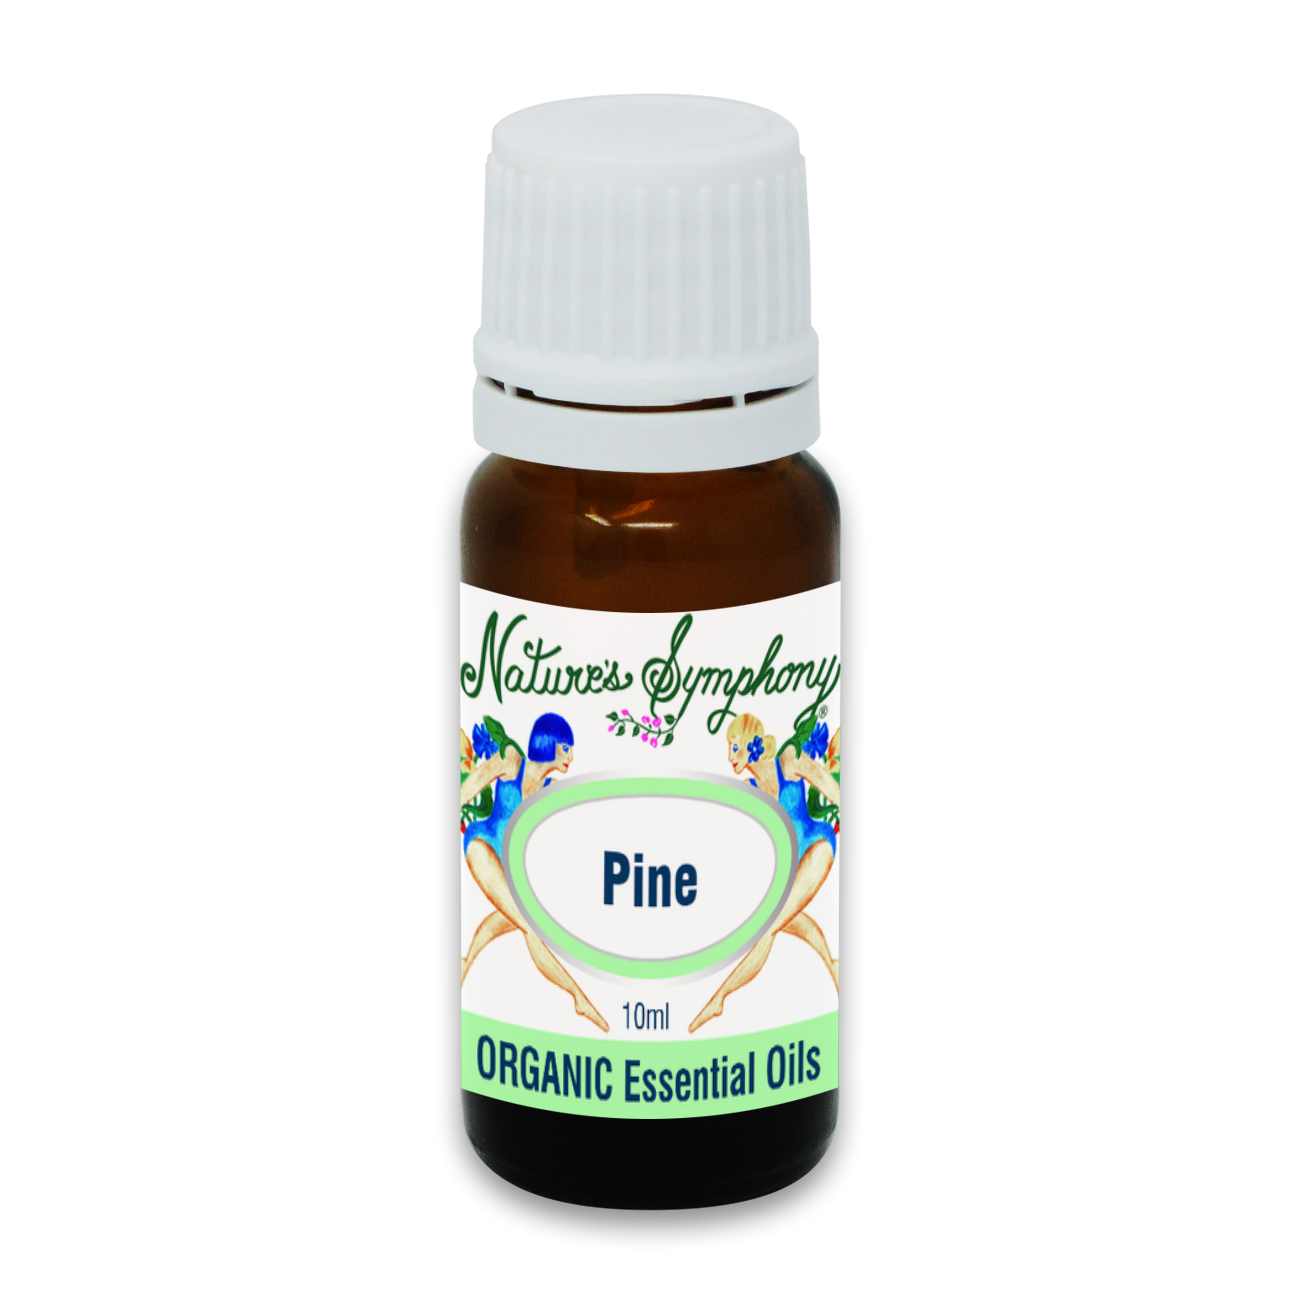 Pine, Organic/Wildcrafted oil - 10ml